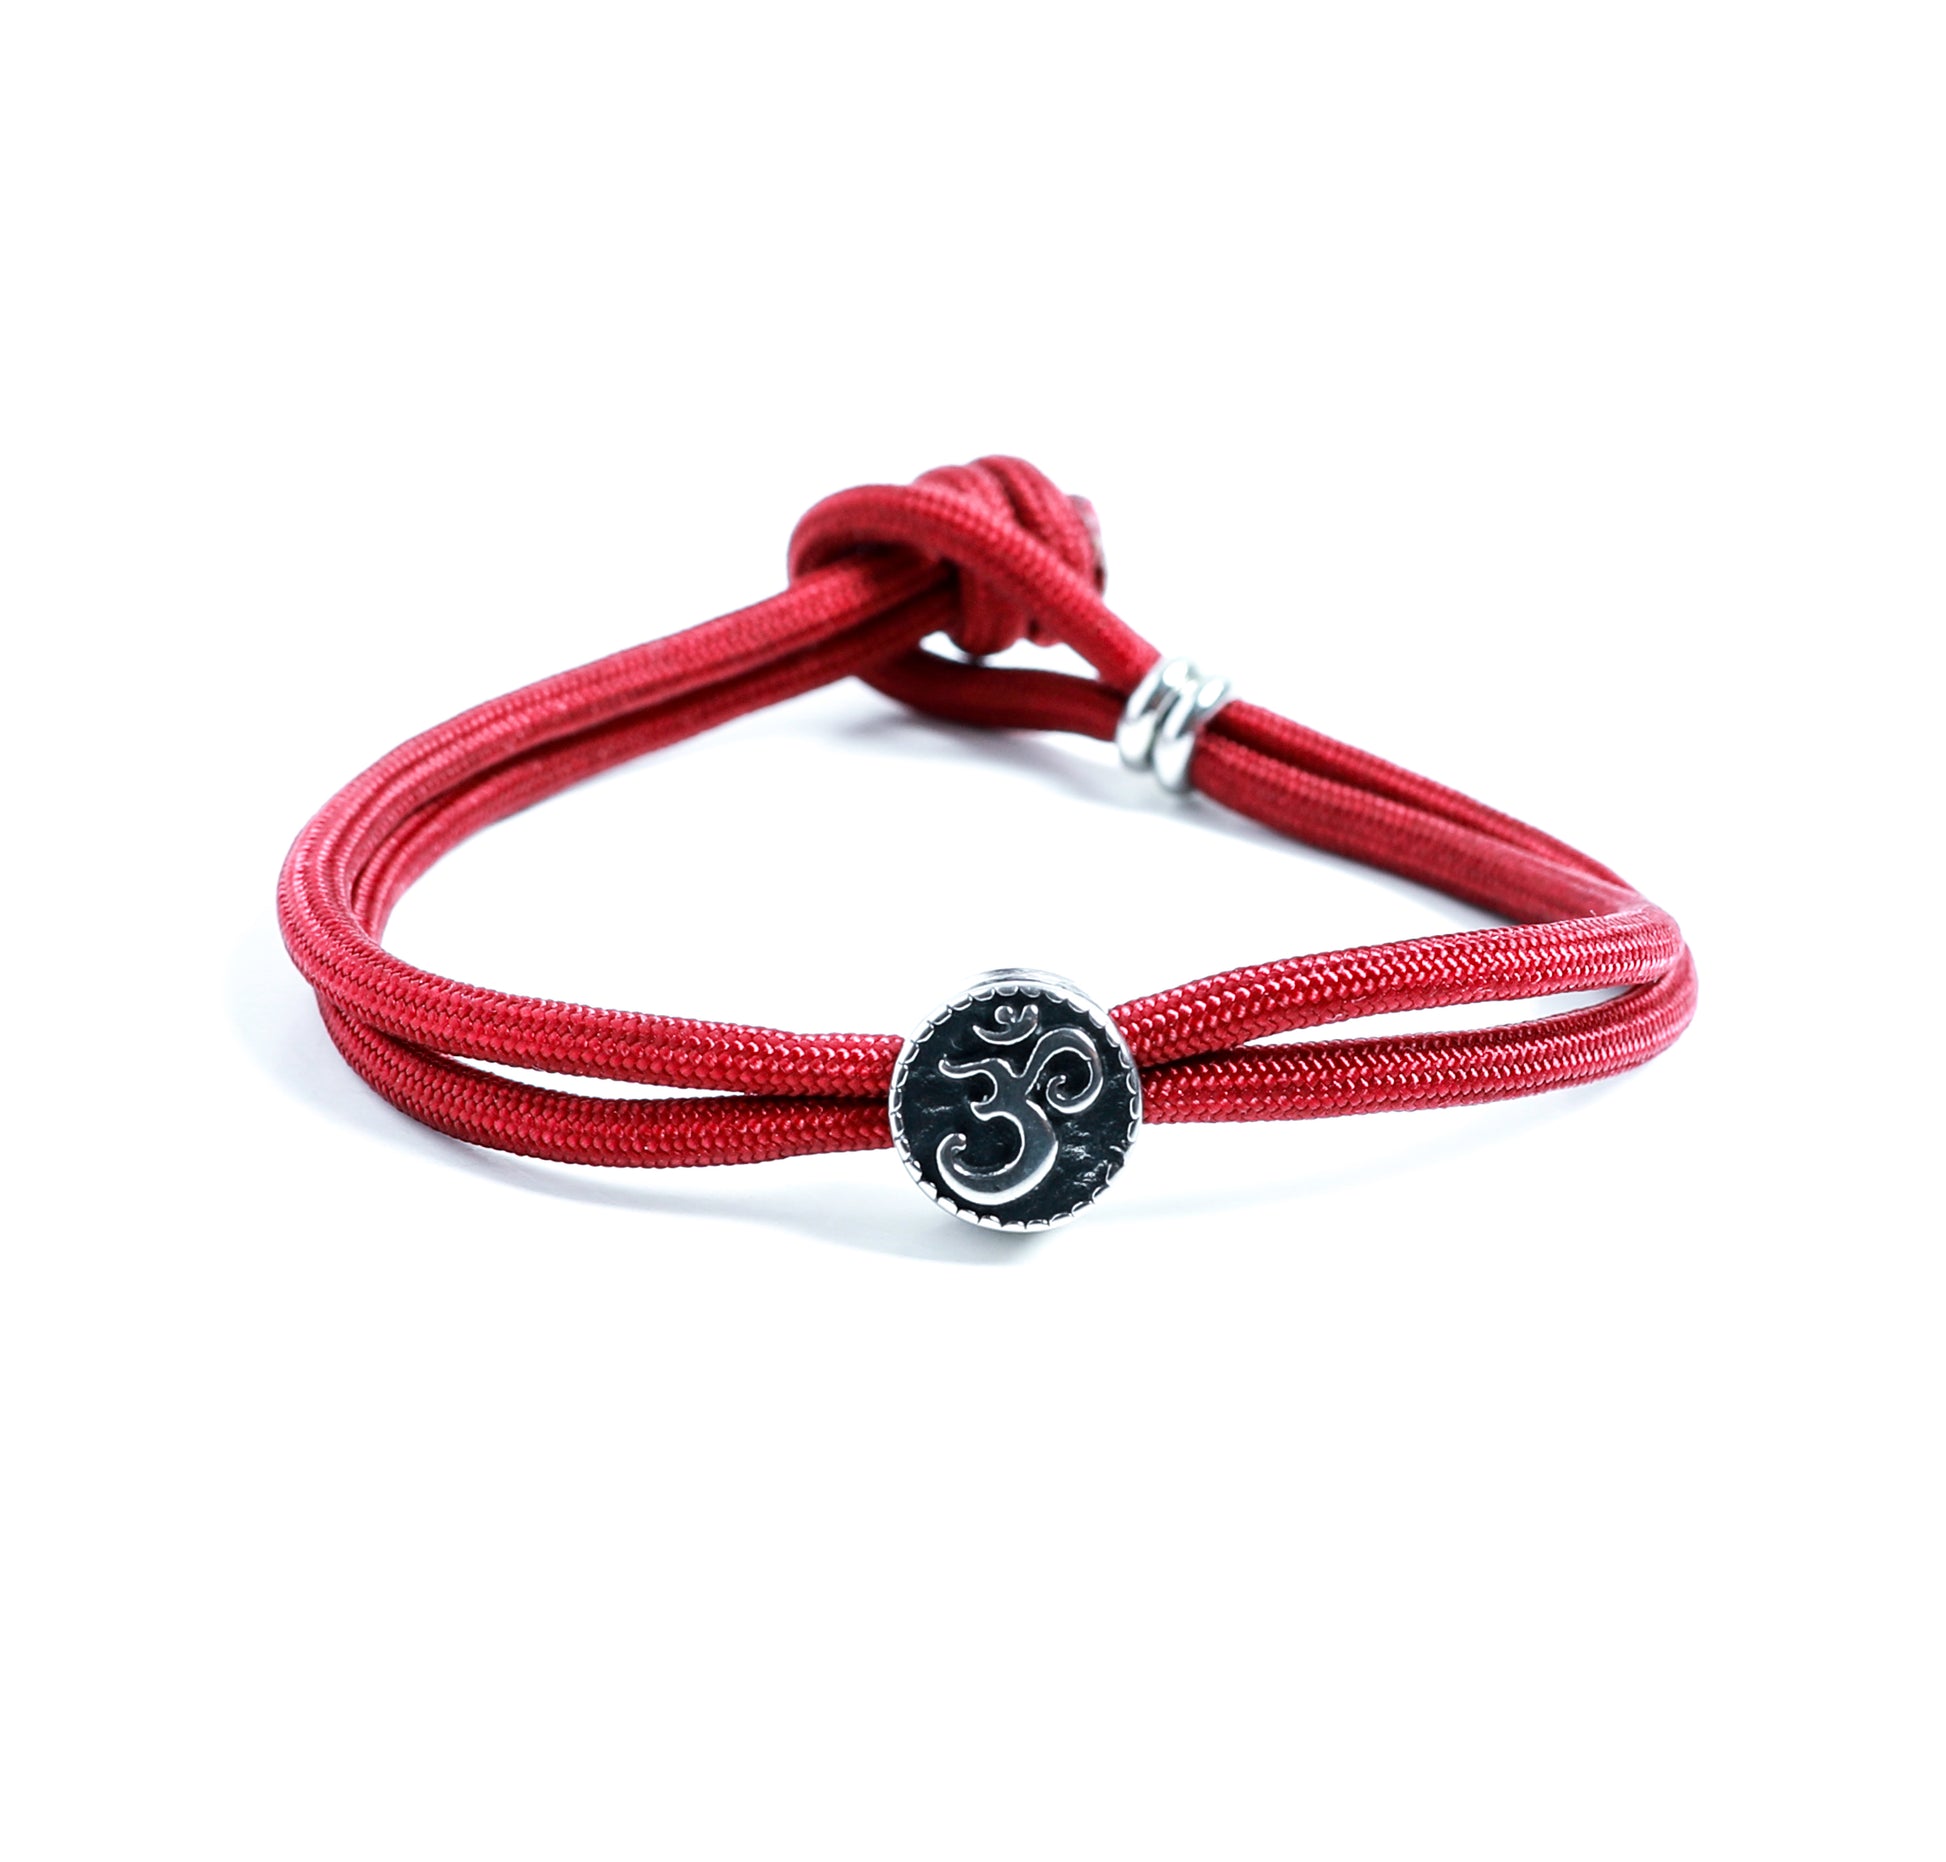 OM charm Cord Rope adjustable Bracelet in red for men at RM KANDY